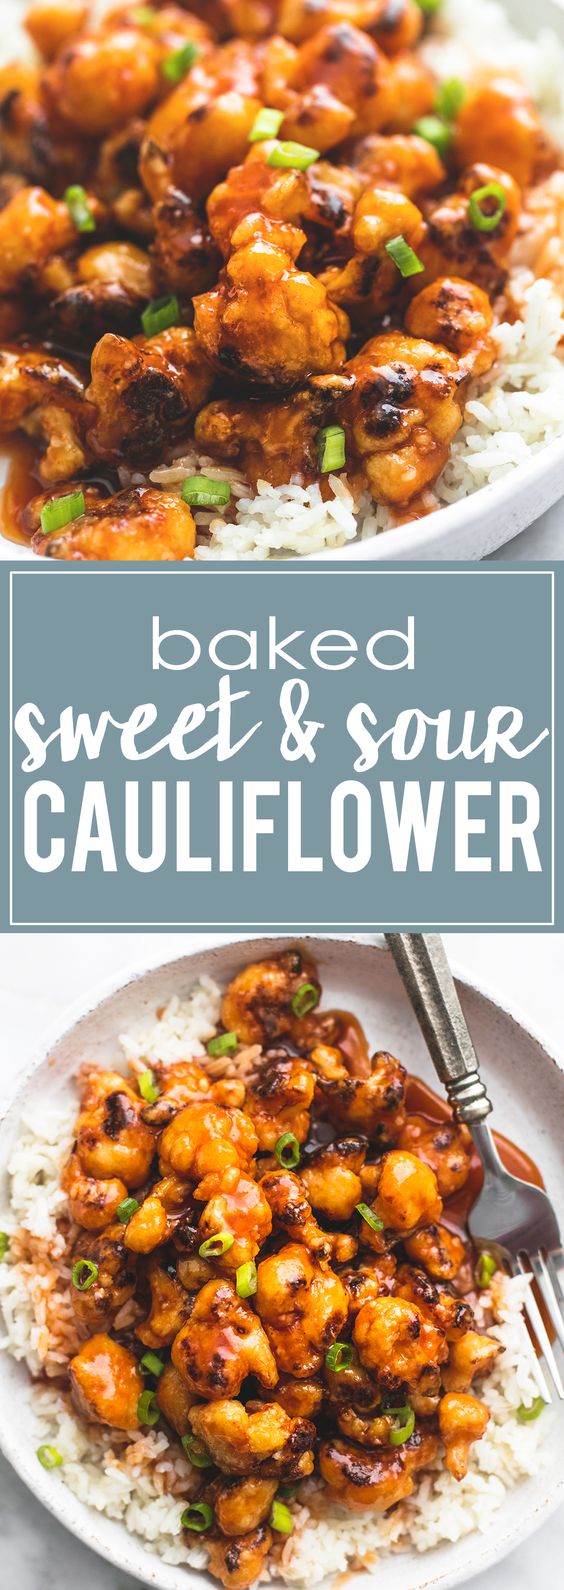 Baked Sweet & Sour Cauliflower